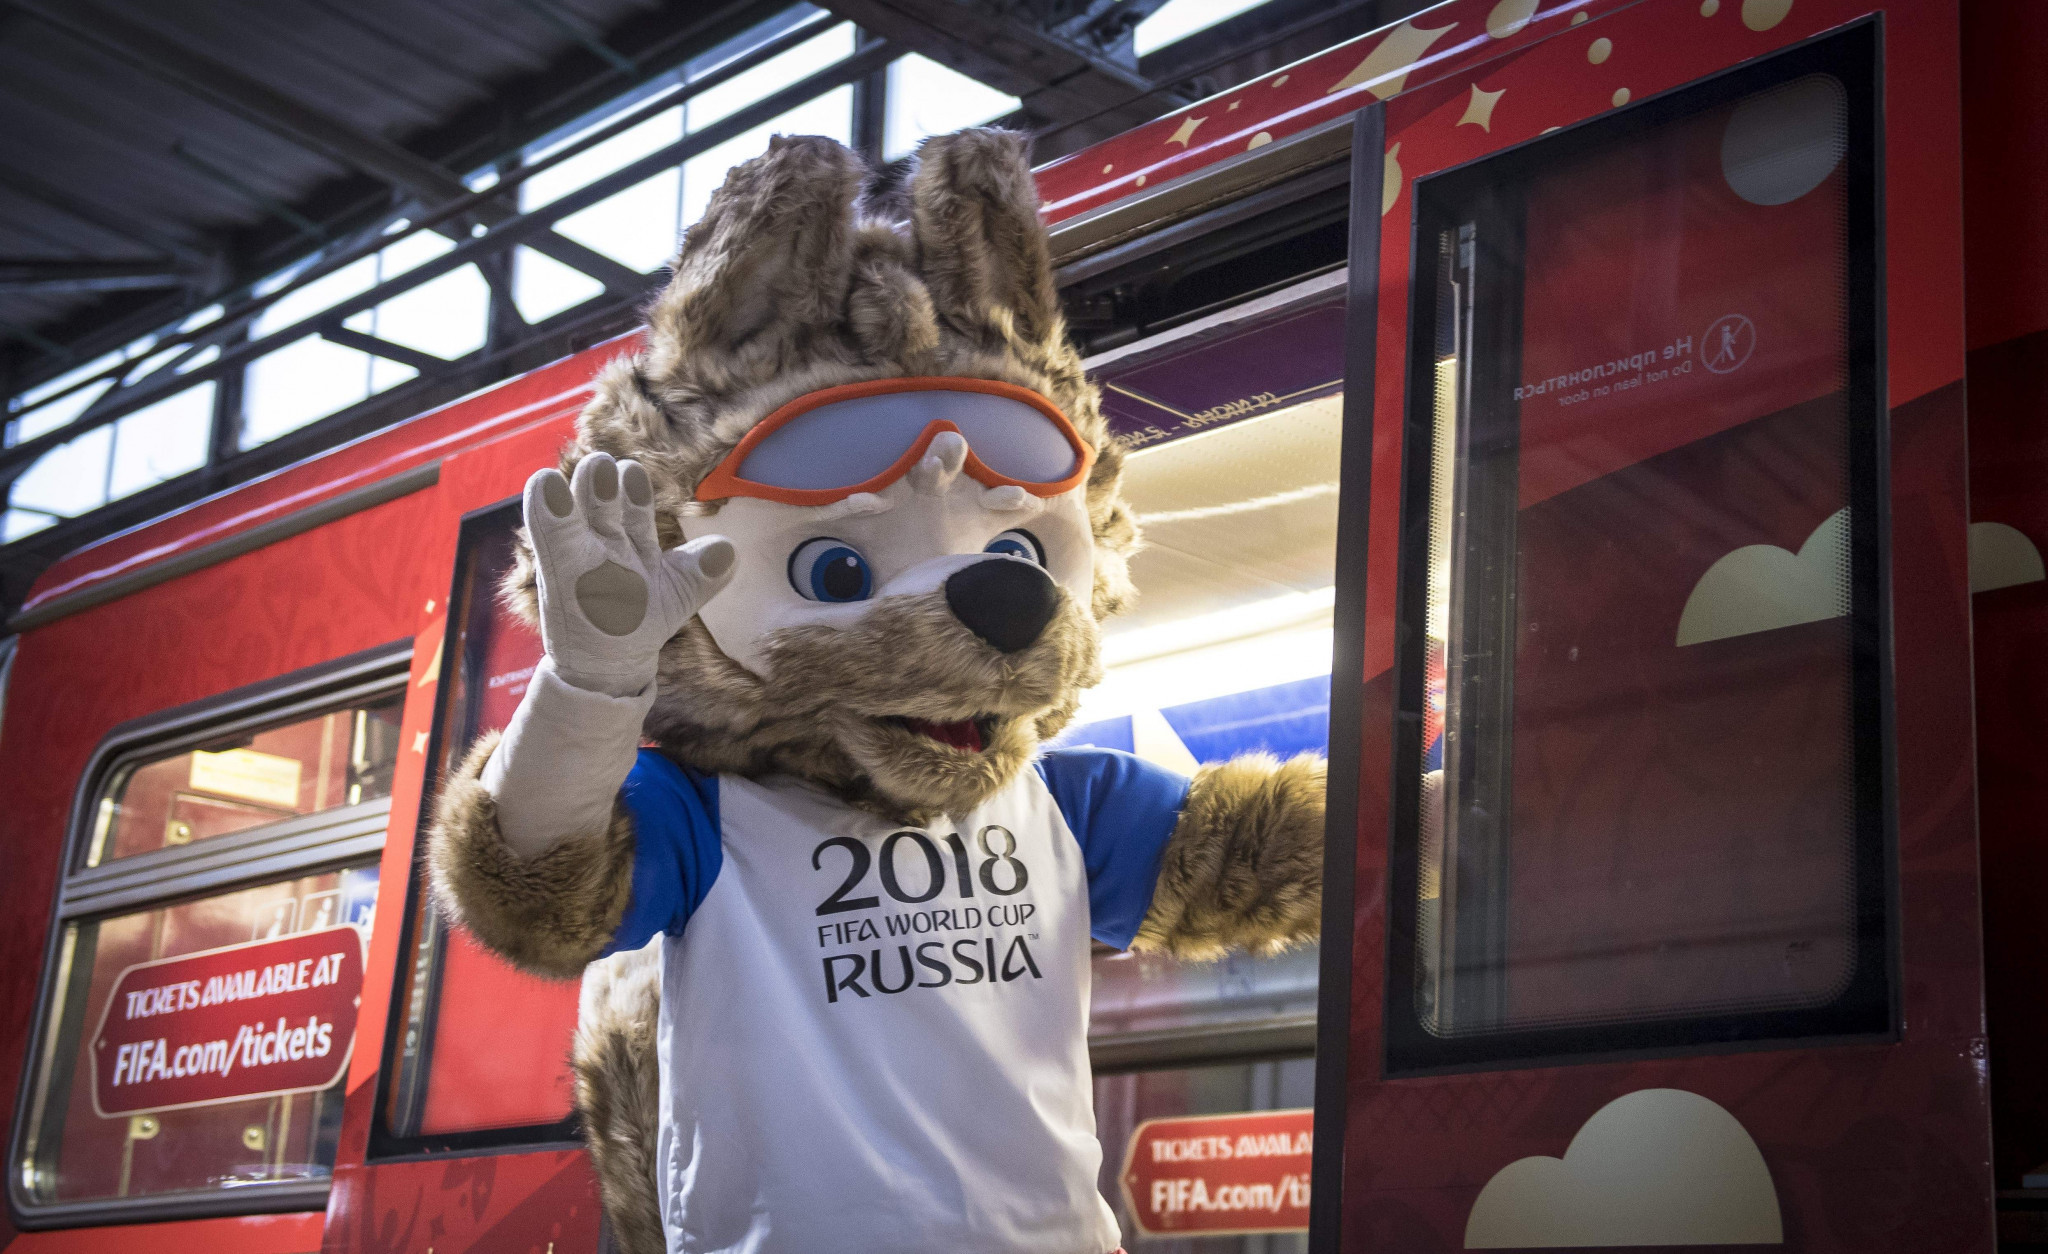 Russia's US embassy insist fans will attend World Cup despite "negative" press coverage